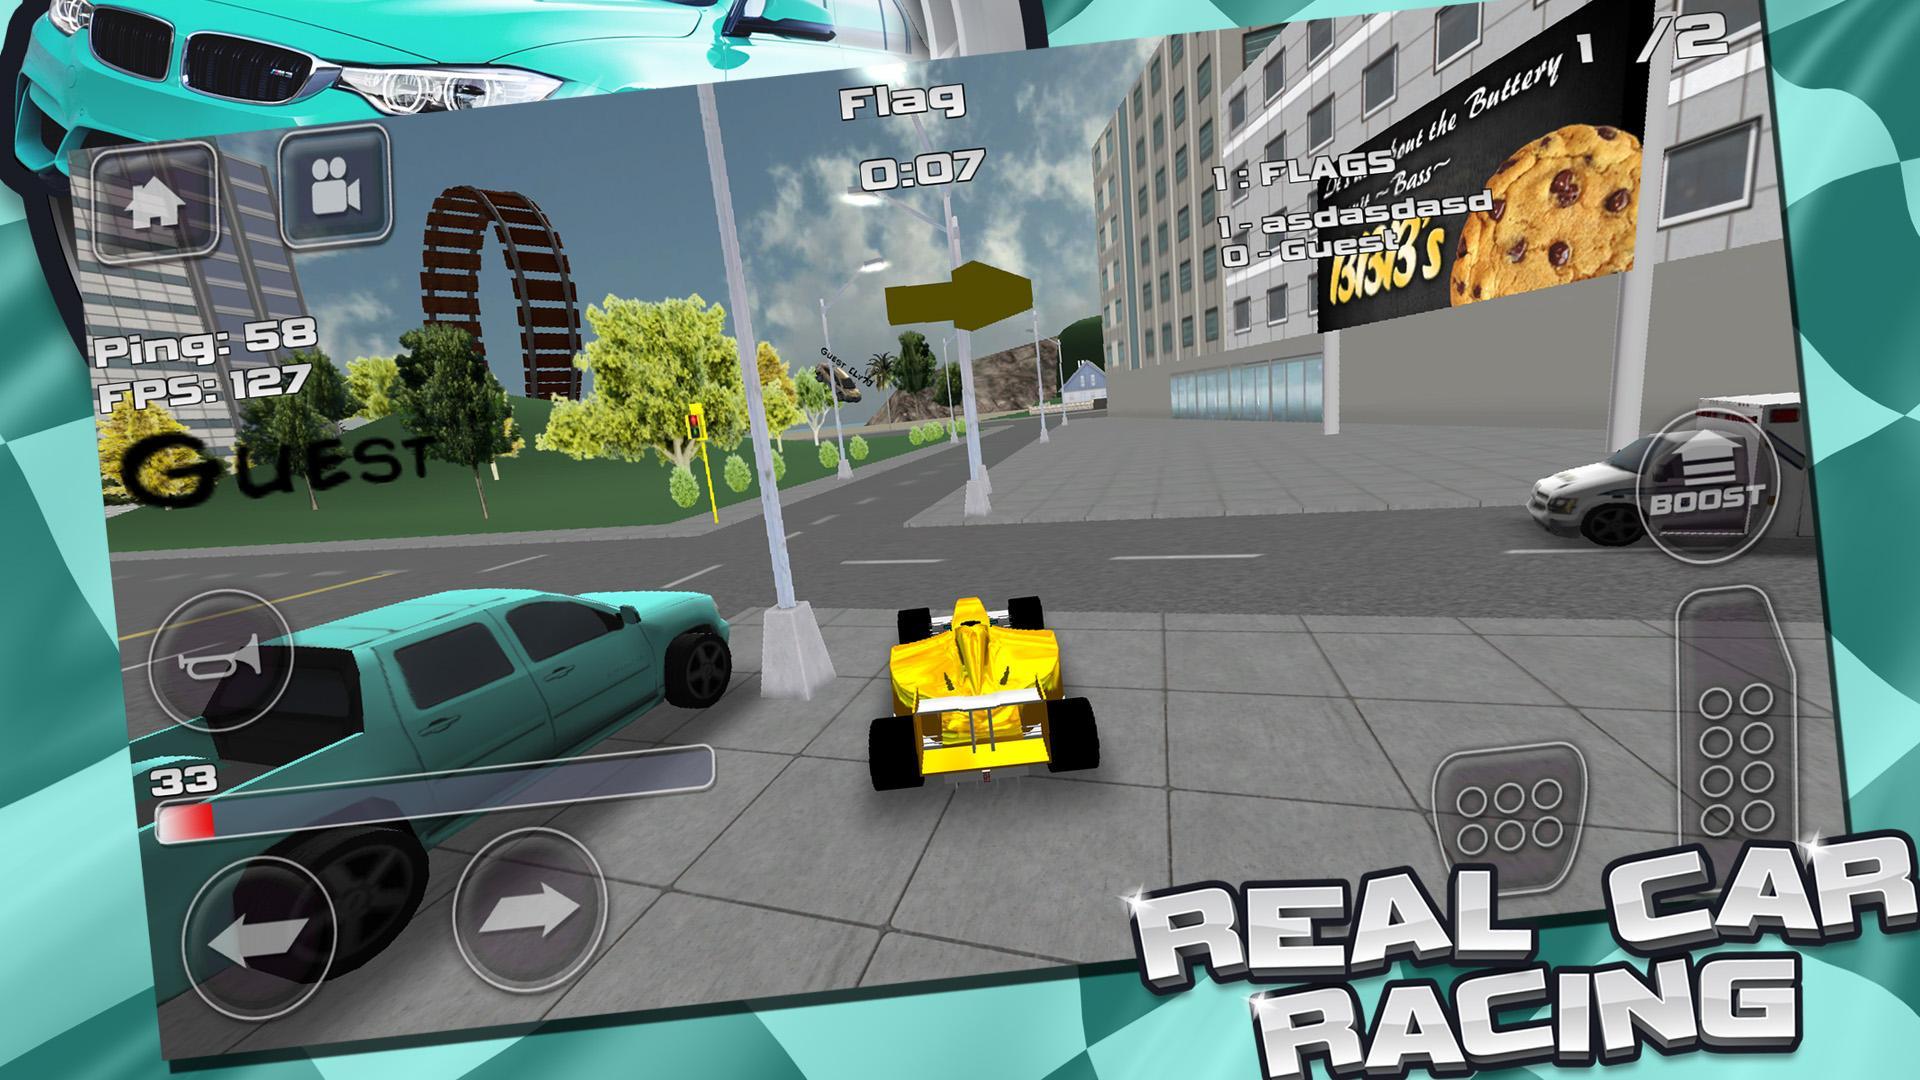 Racing in car multiplayer. Car Racing Multiplayer. Real car Multiplayer. Игра мультиплеер про маленькие машинки. Real Multiplayer Racing.